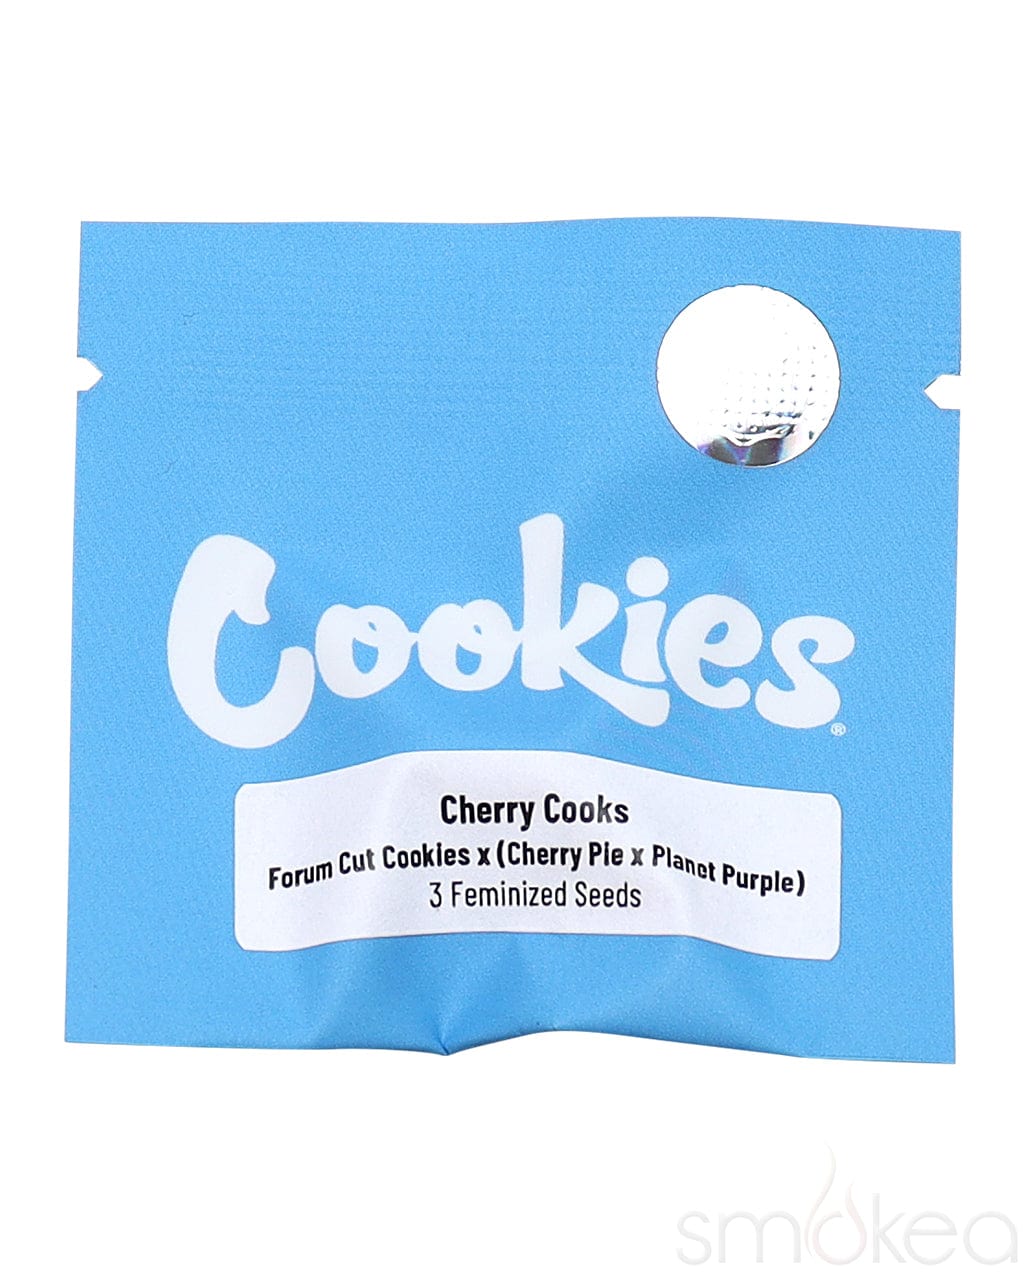 Cookies Cannabis Seeds - Cherry Cooks